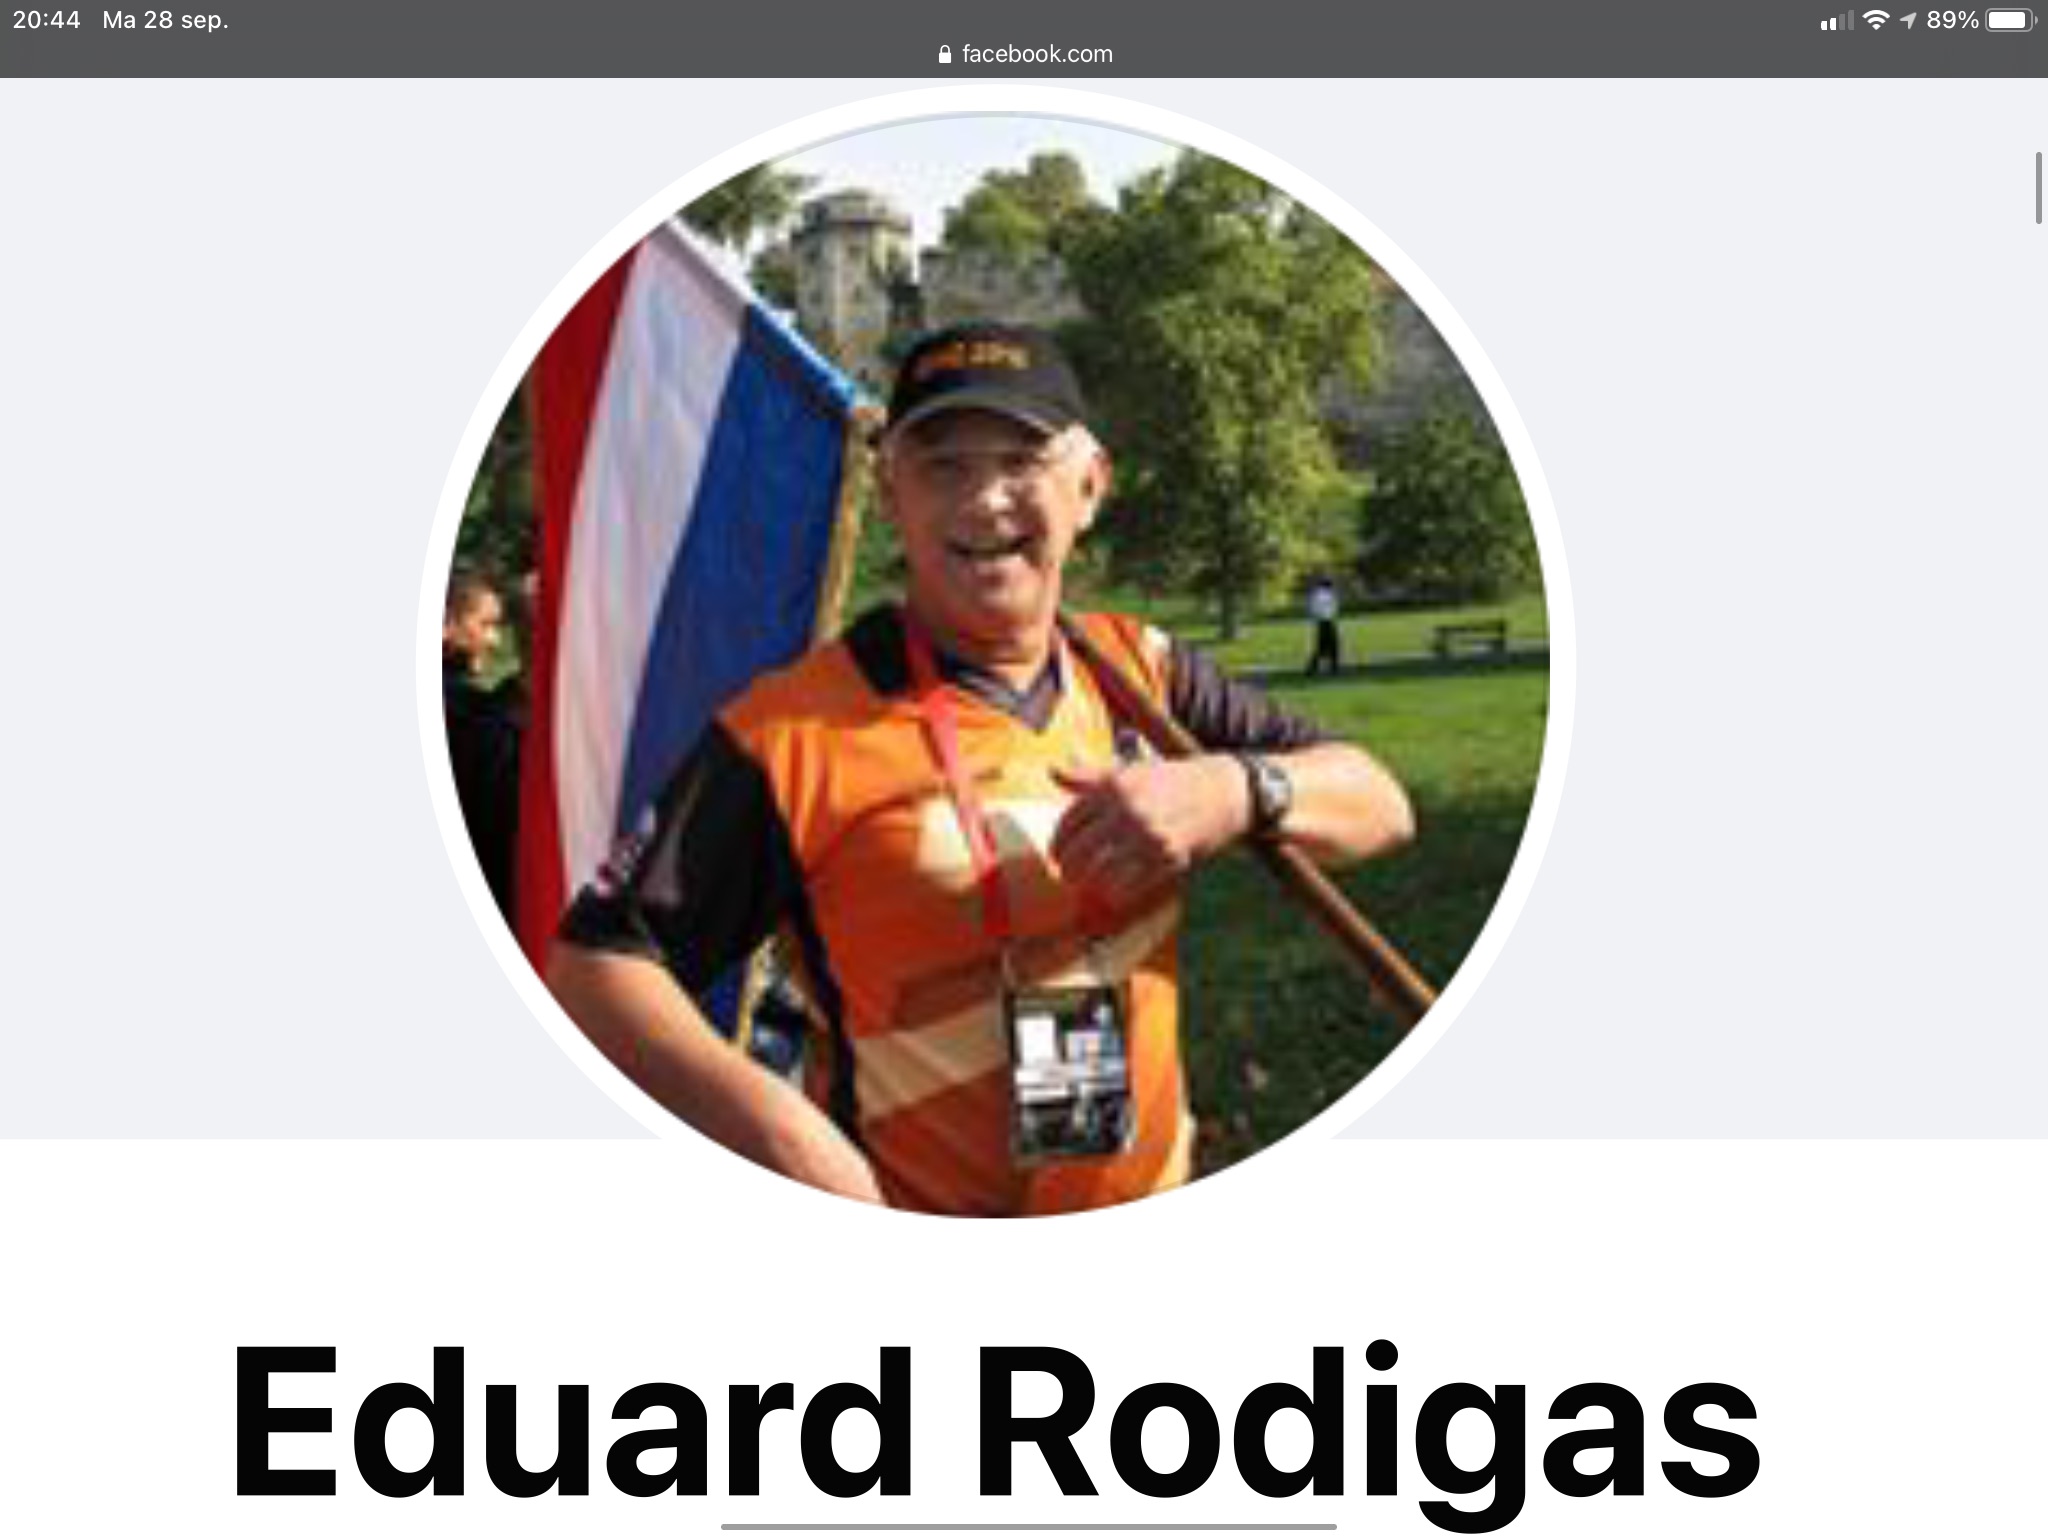 Eduard Rodigas